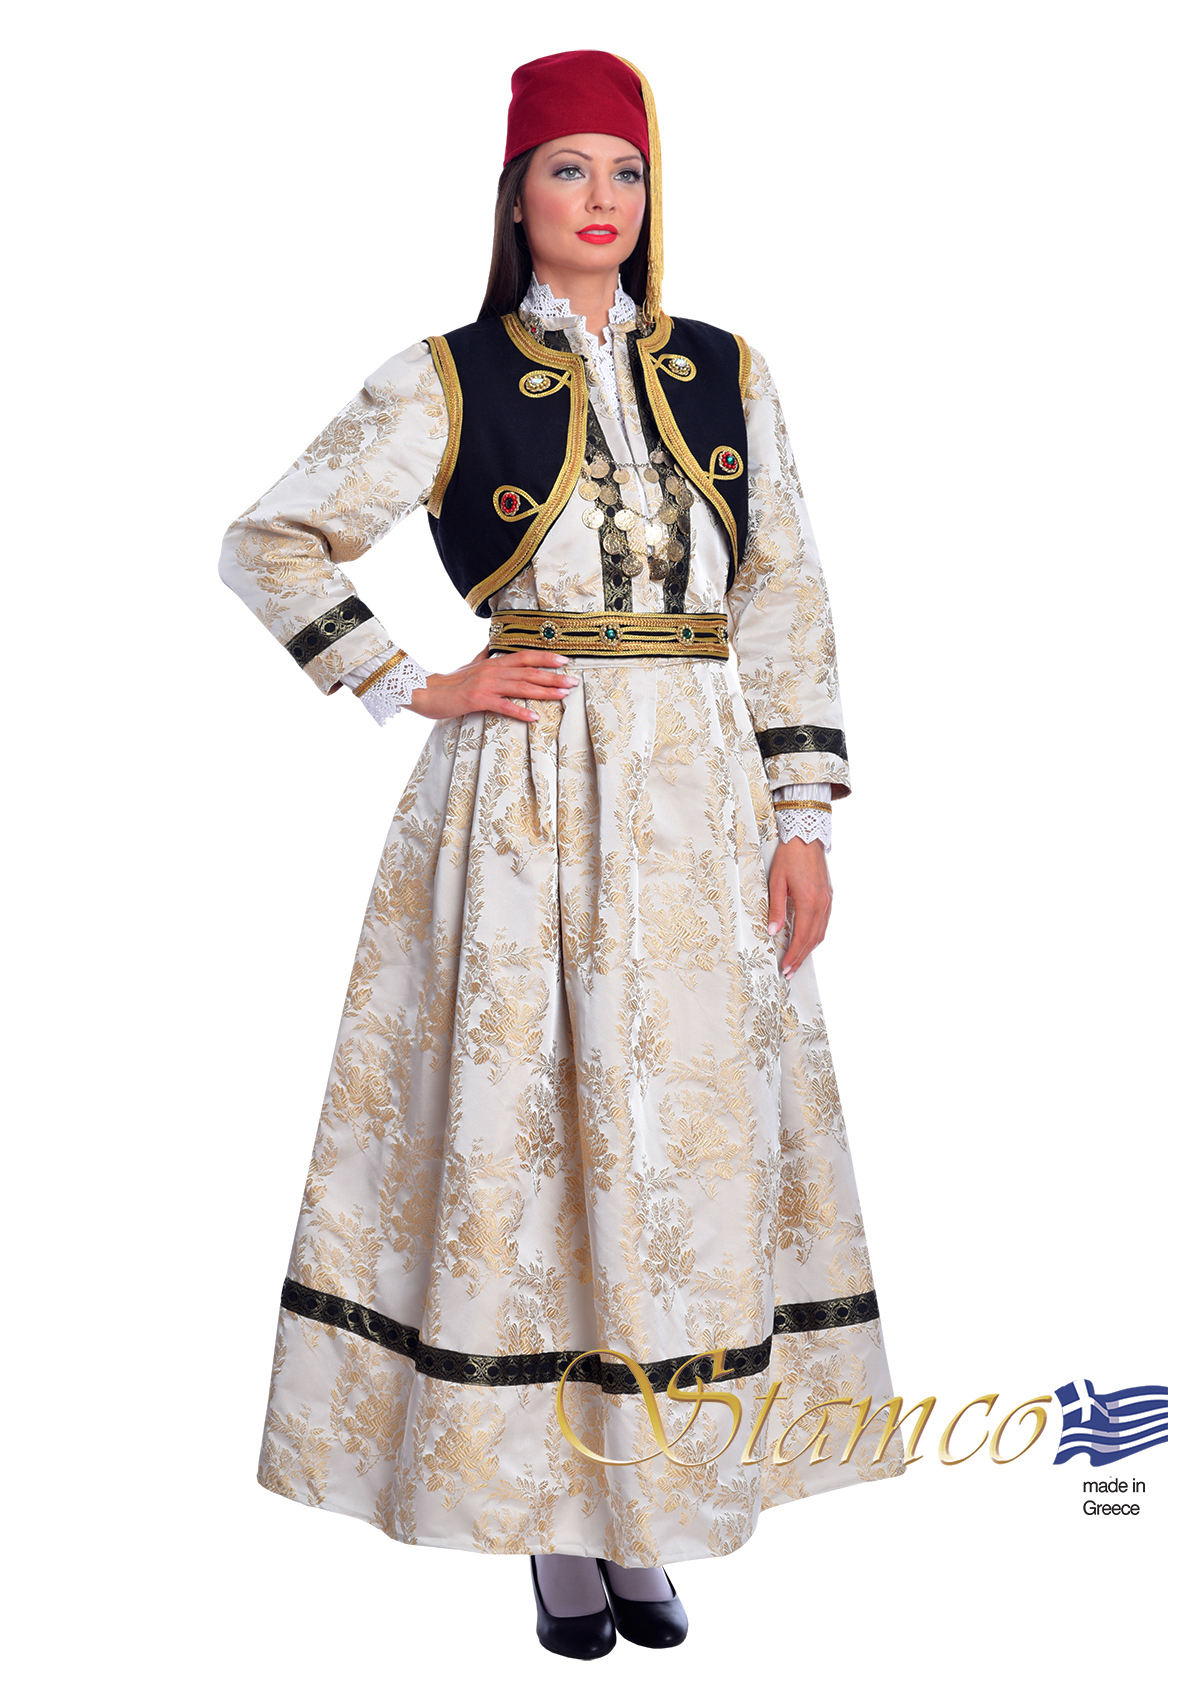 Macedonia Daskio Greek Costume 